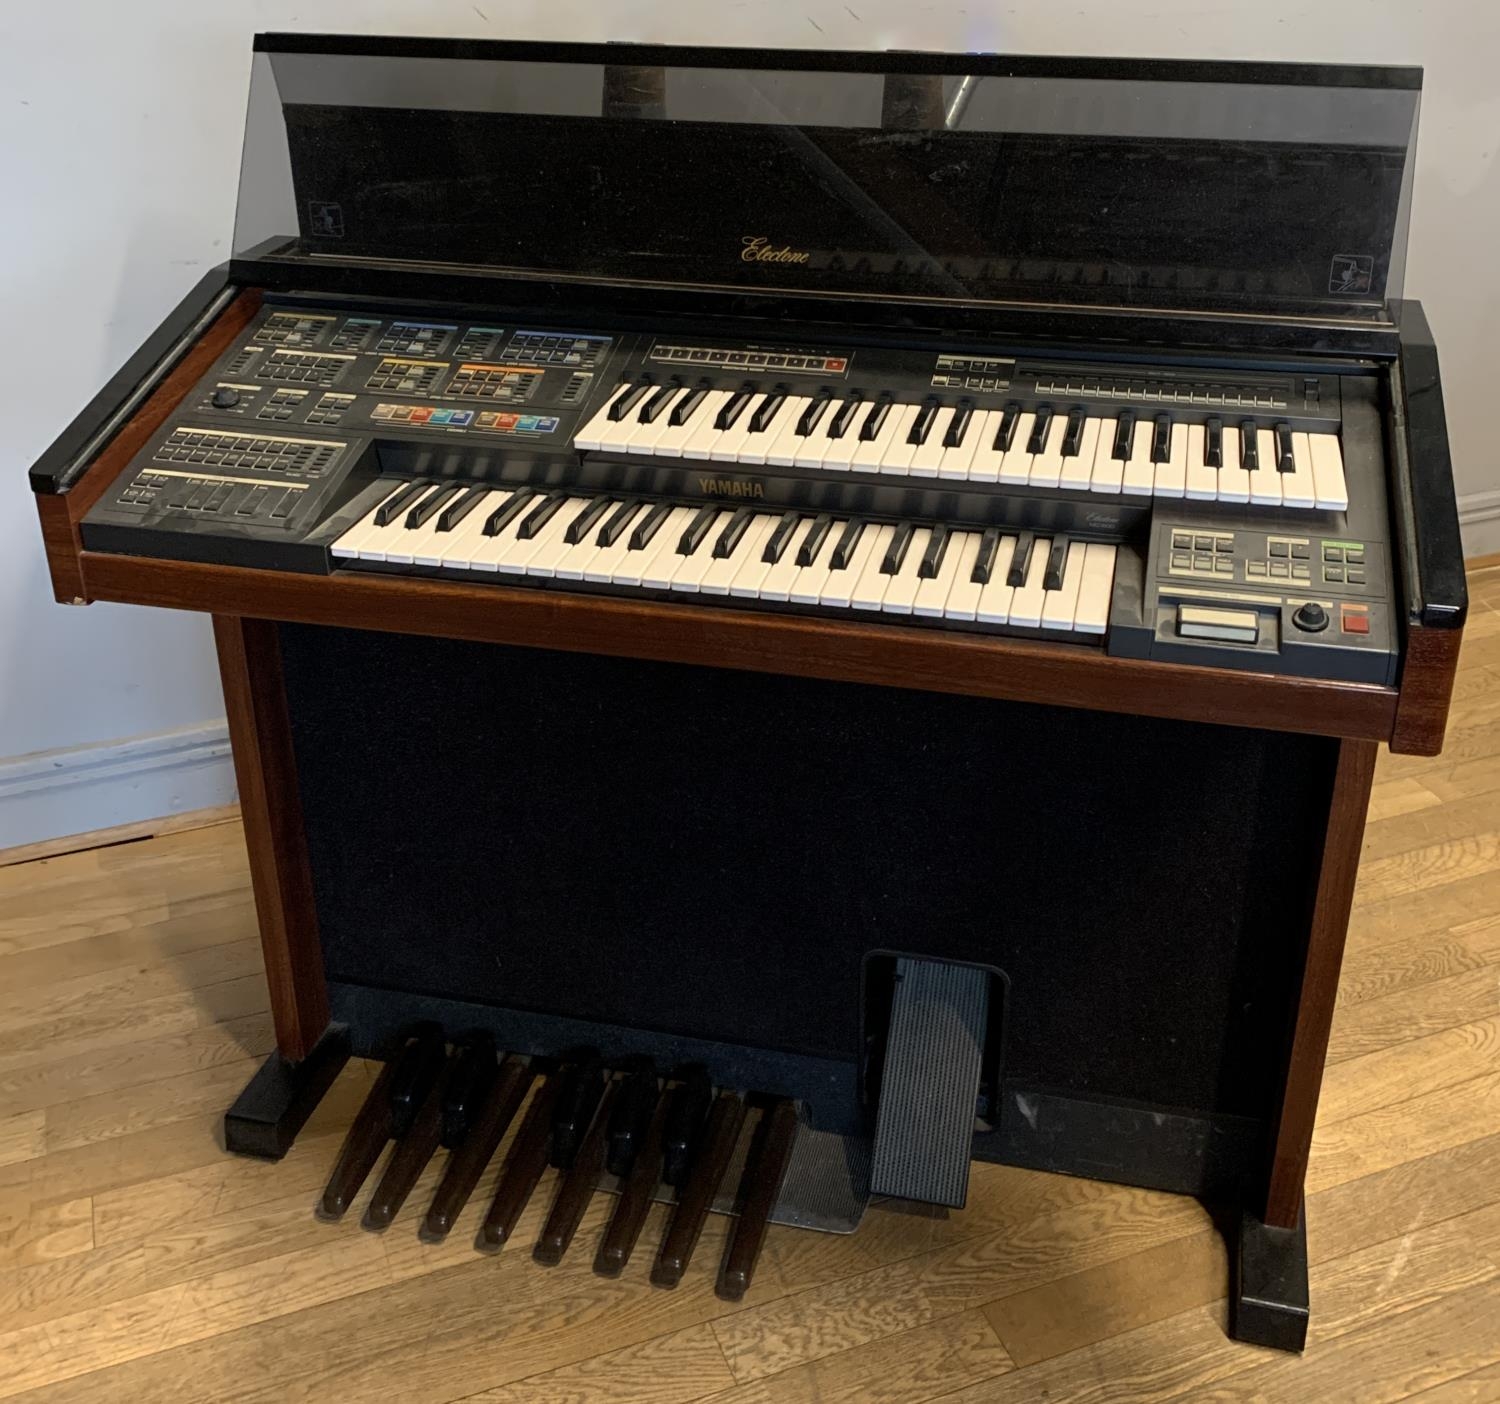 A Yamaha Electone organ, 108cm x 90cm x 45cm